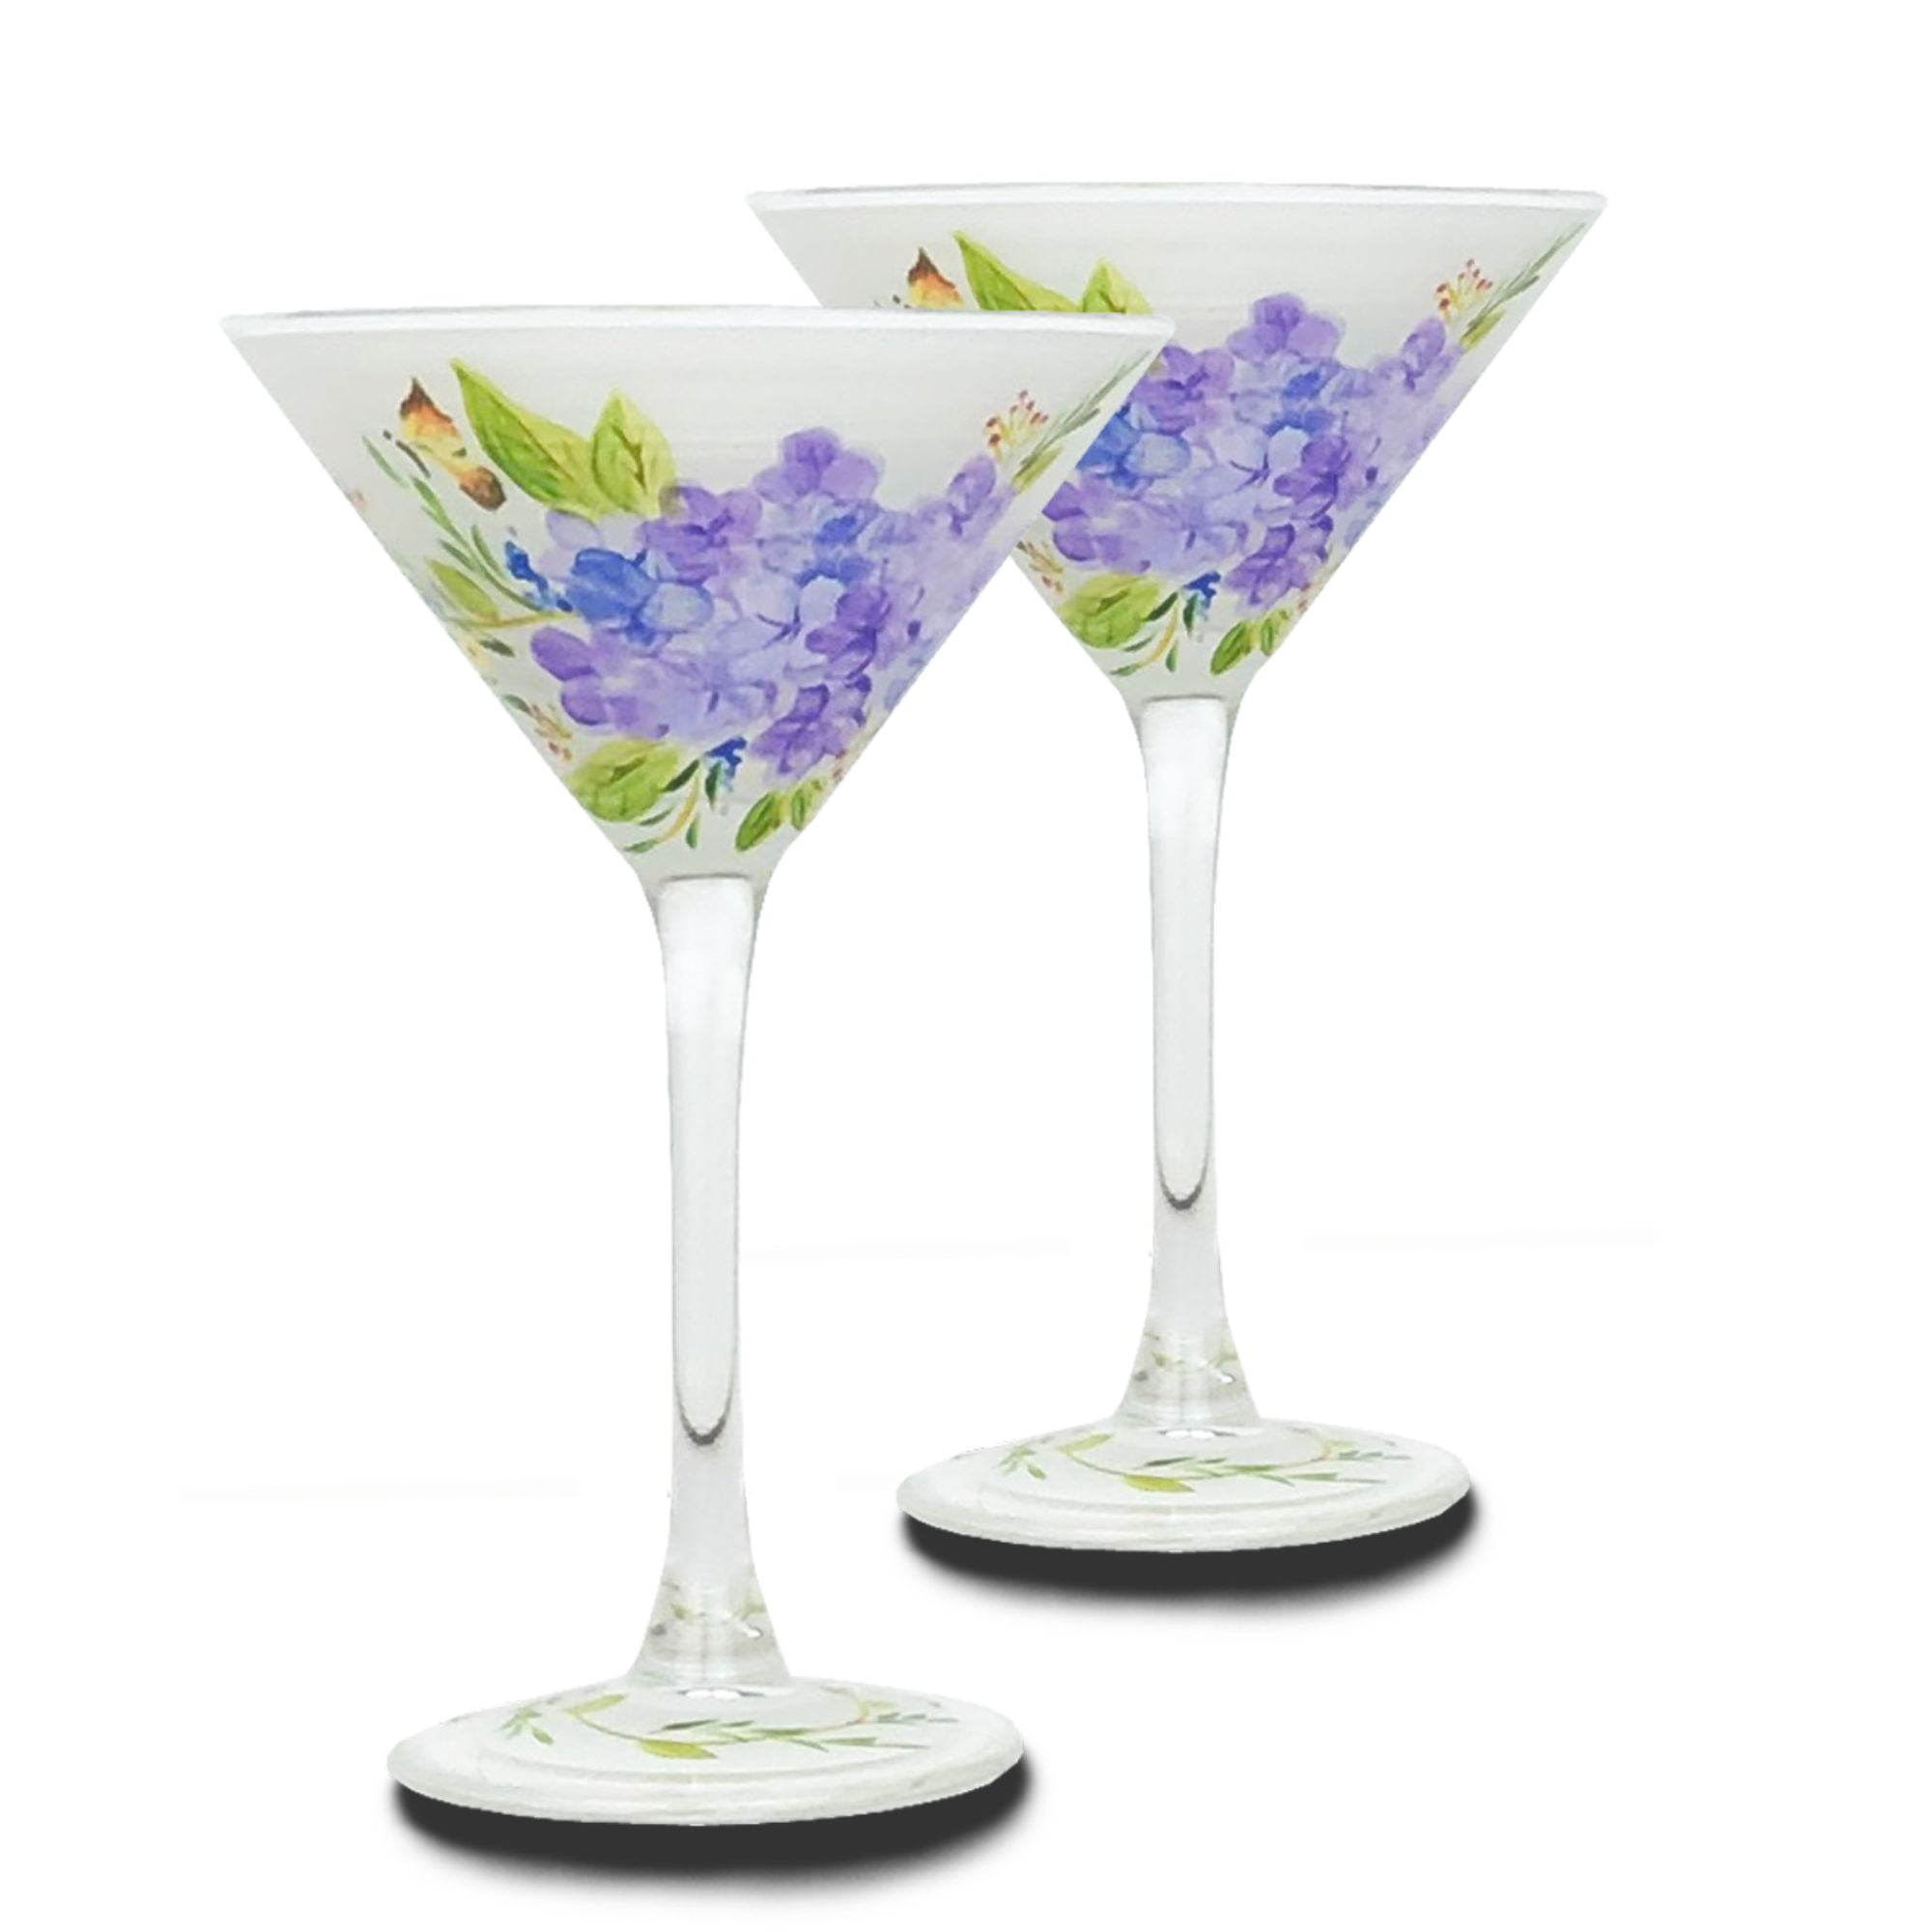 Modern Martini Glasses Set of 2 Blue